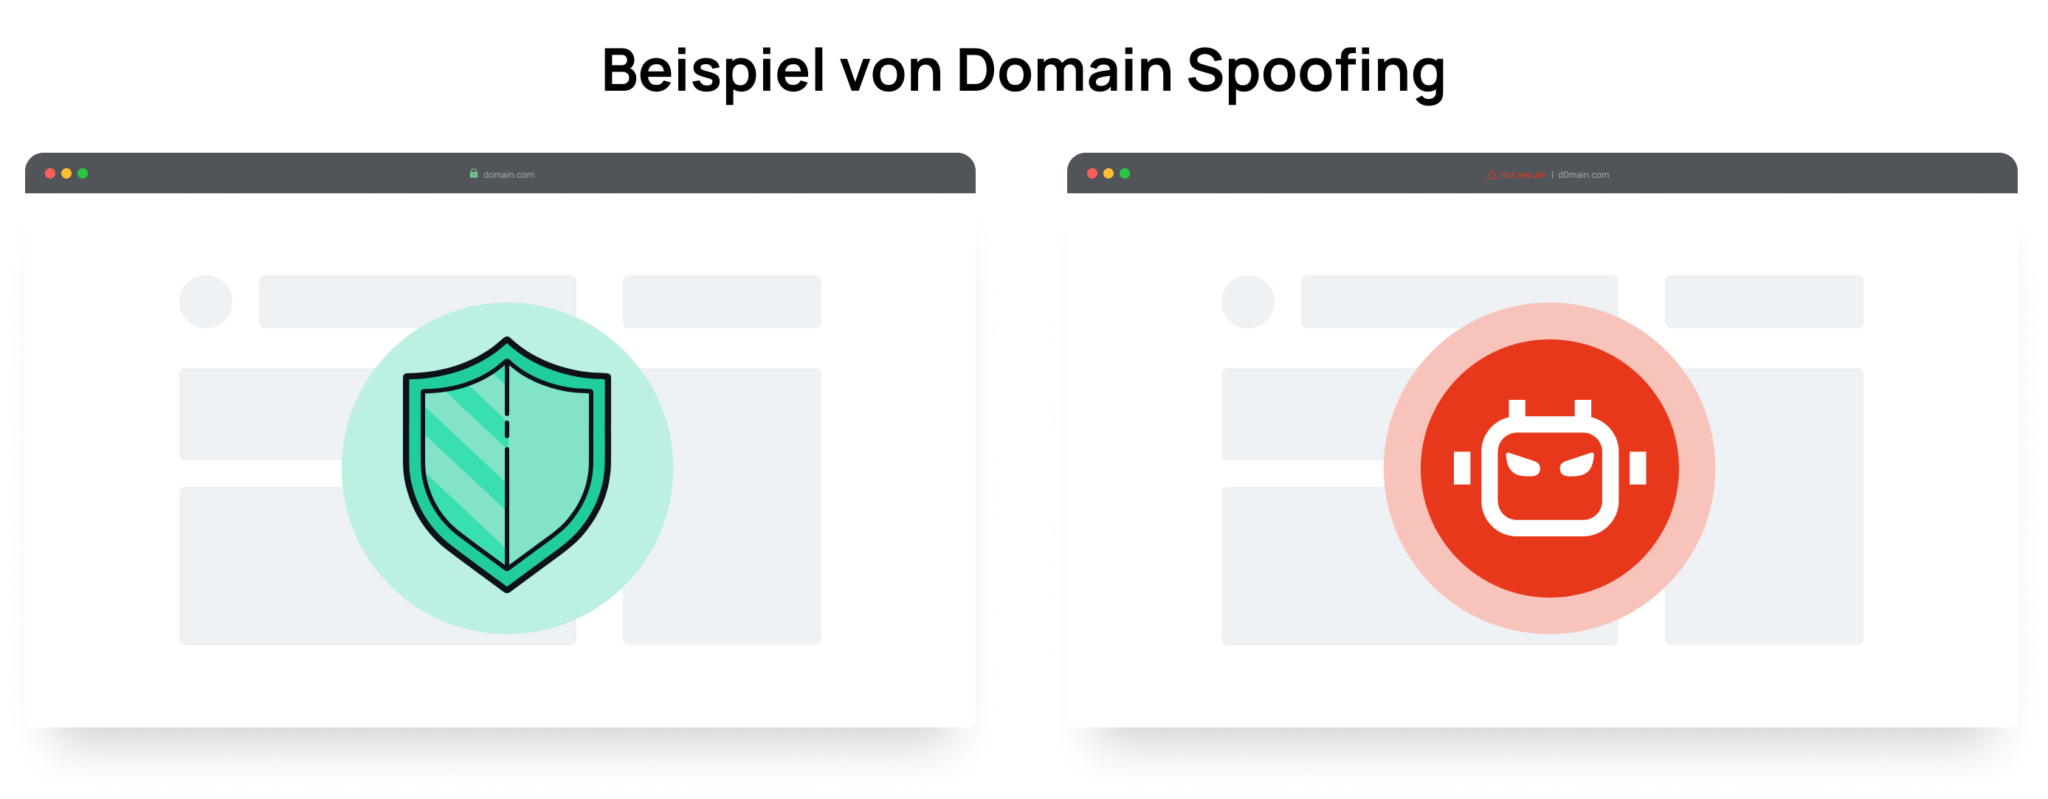 Domain Spoofing Beispiel